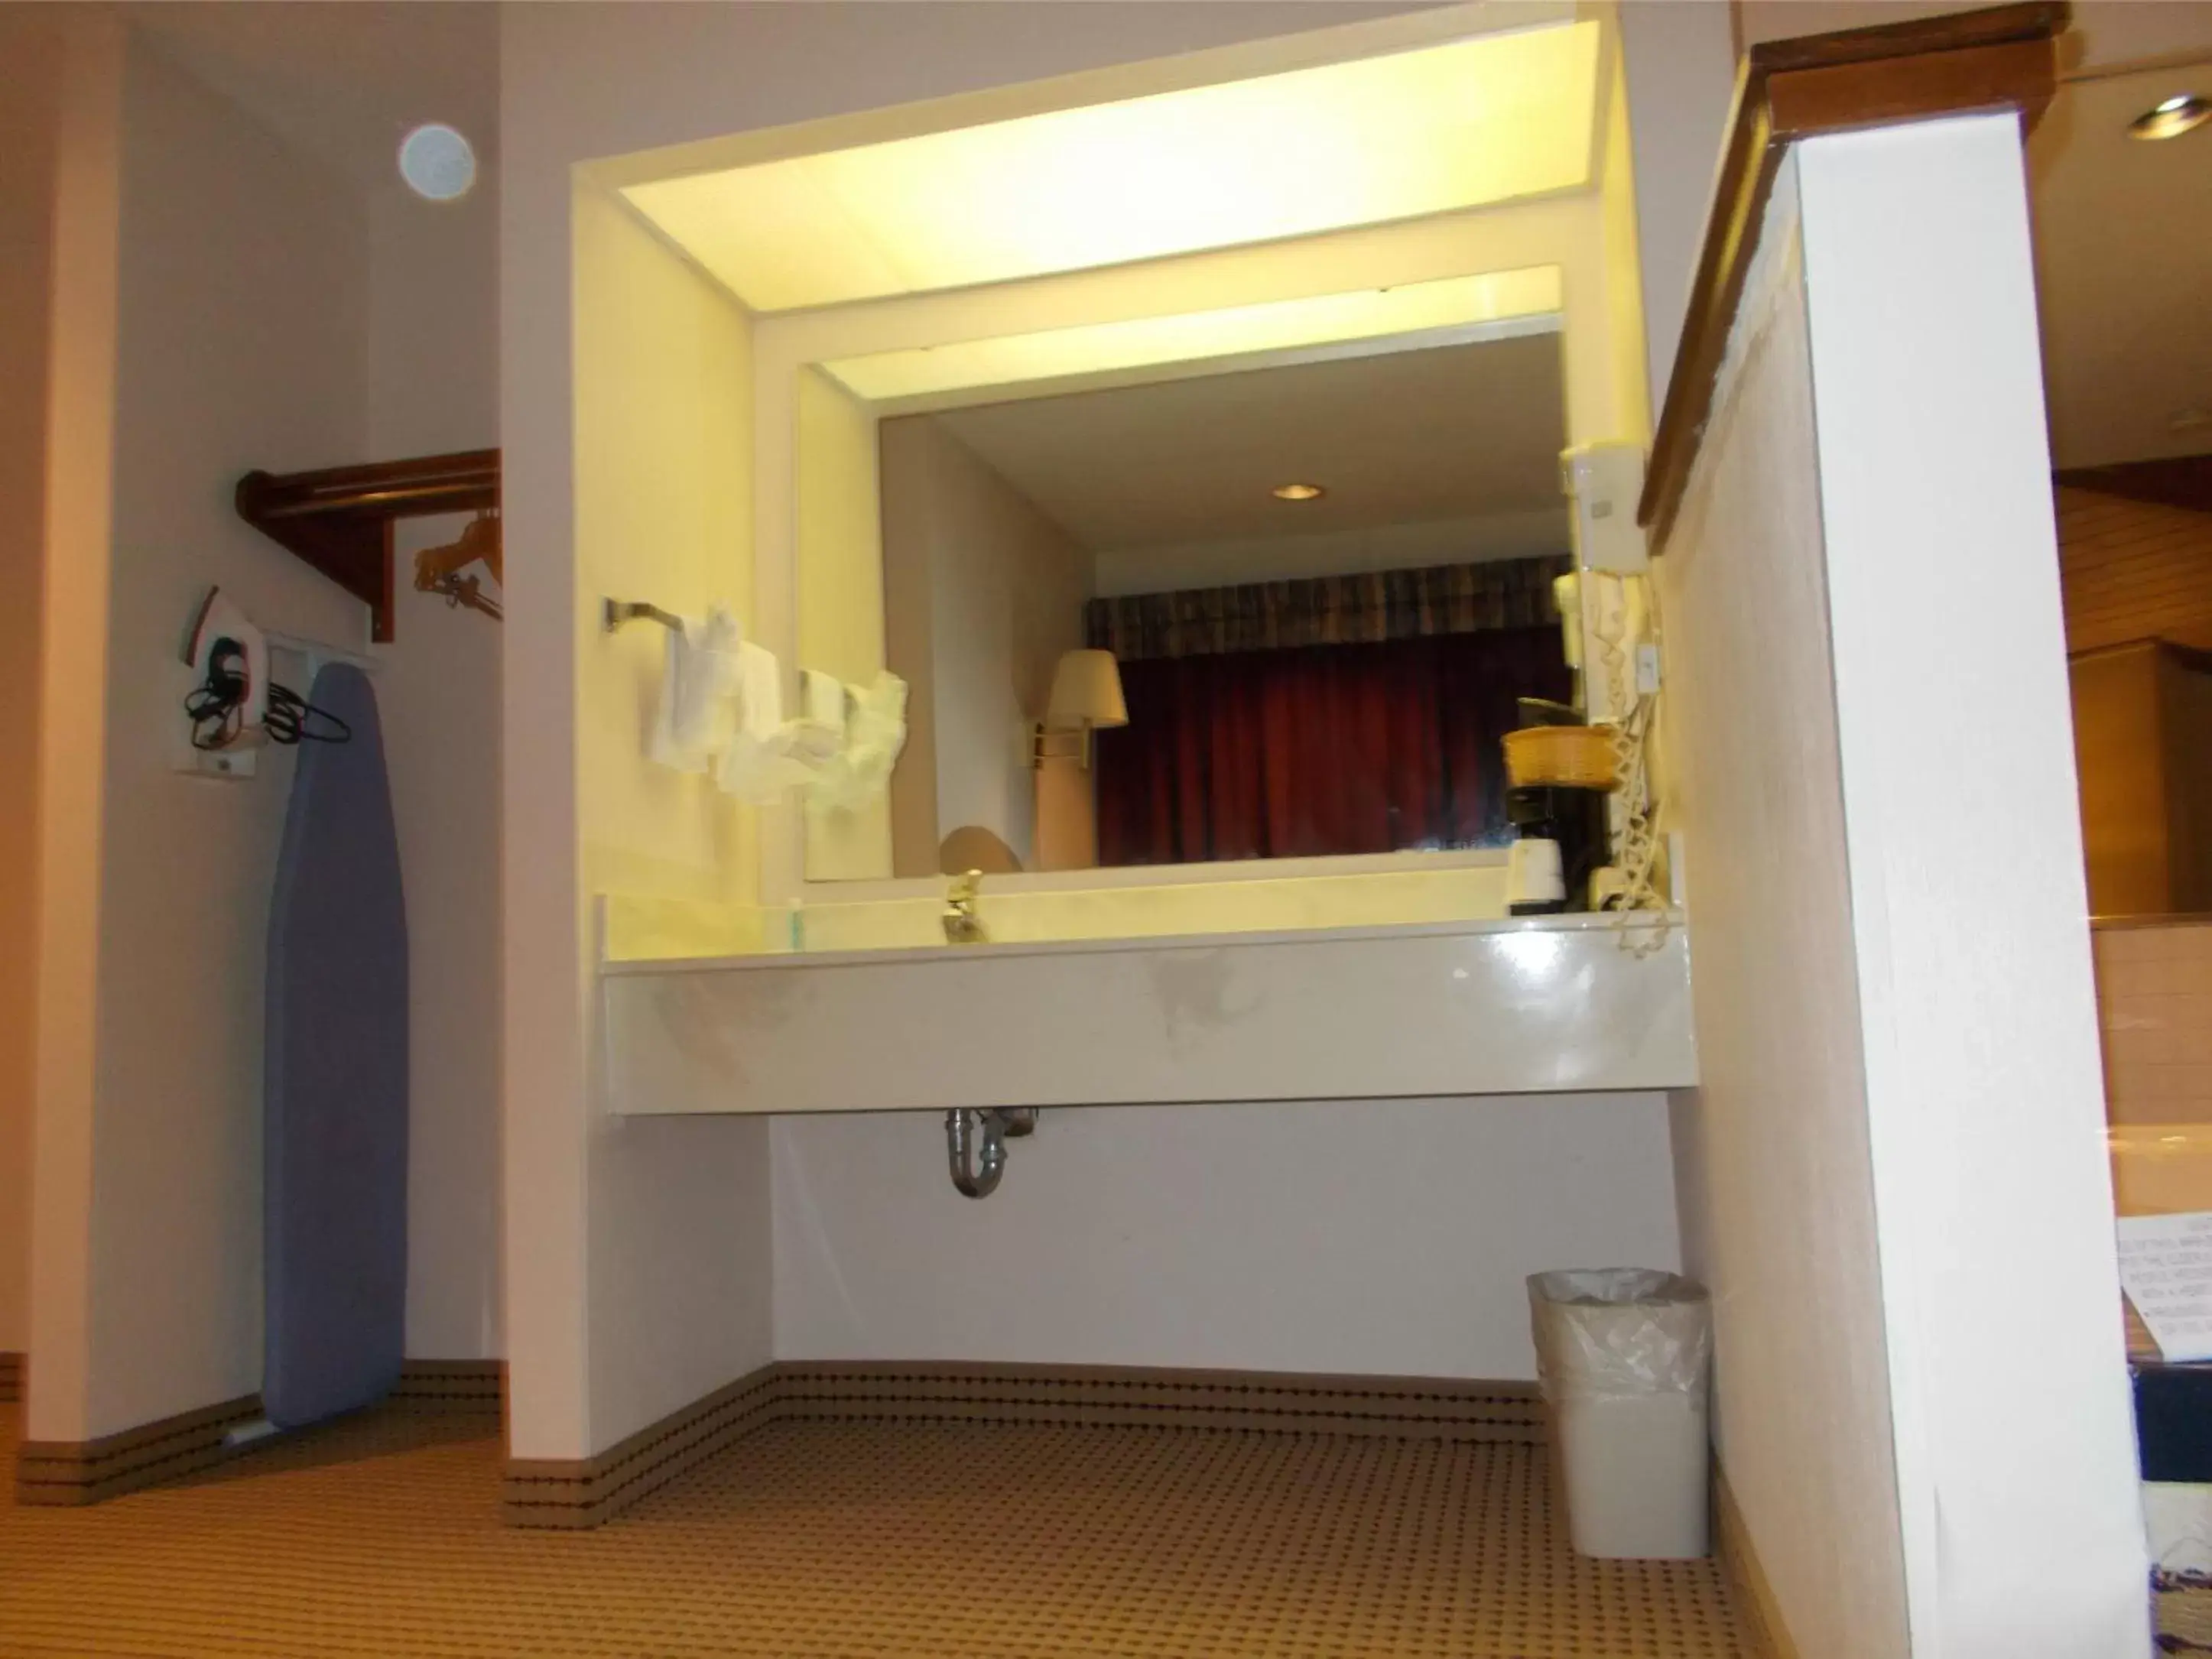 Bathroom in Royalton Inn and Suites, Wilmington,Ohio